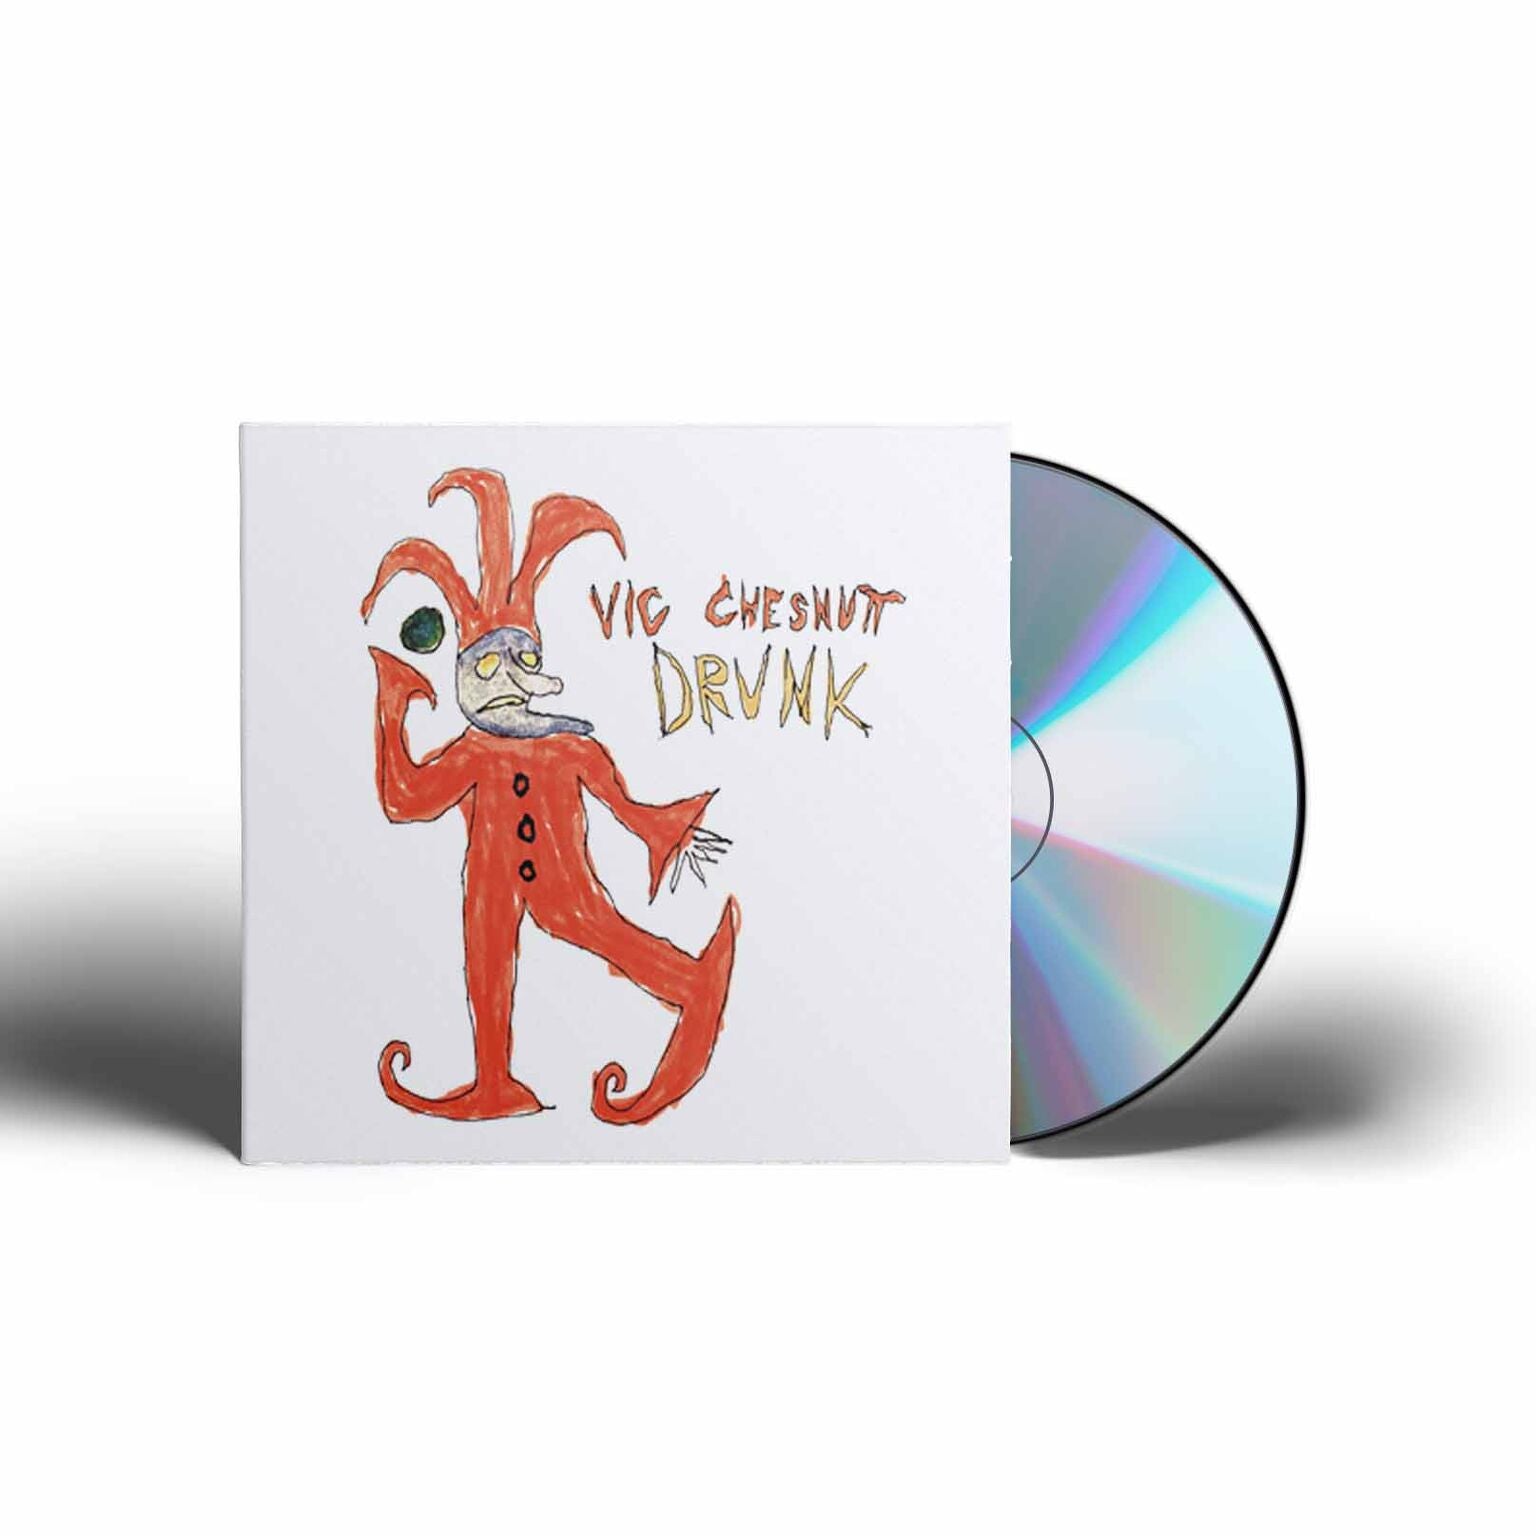 Vic Chesnutt - Drunk [CD]